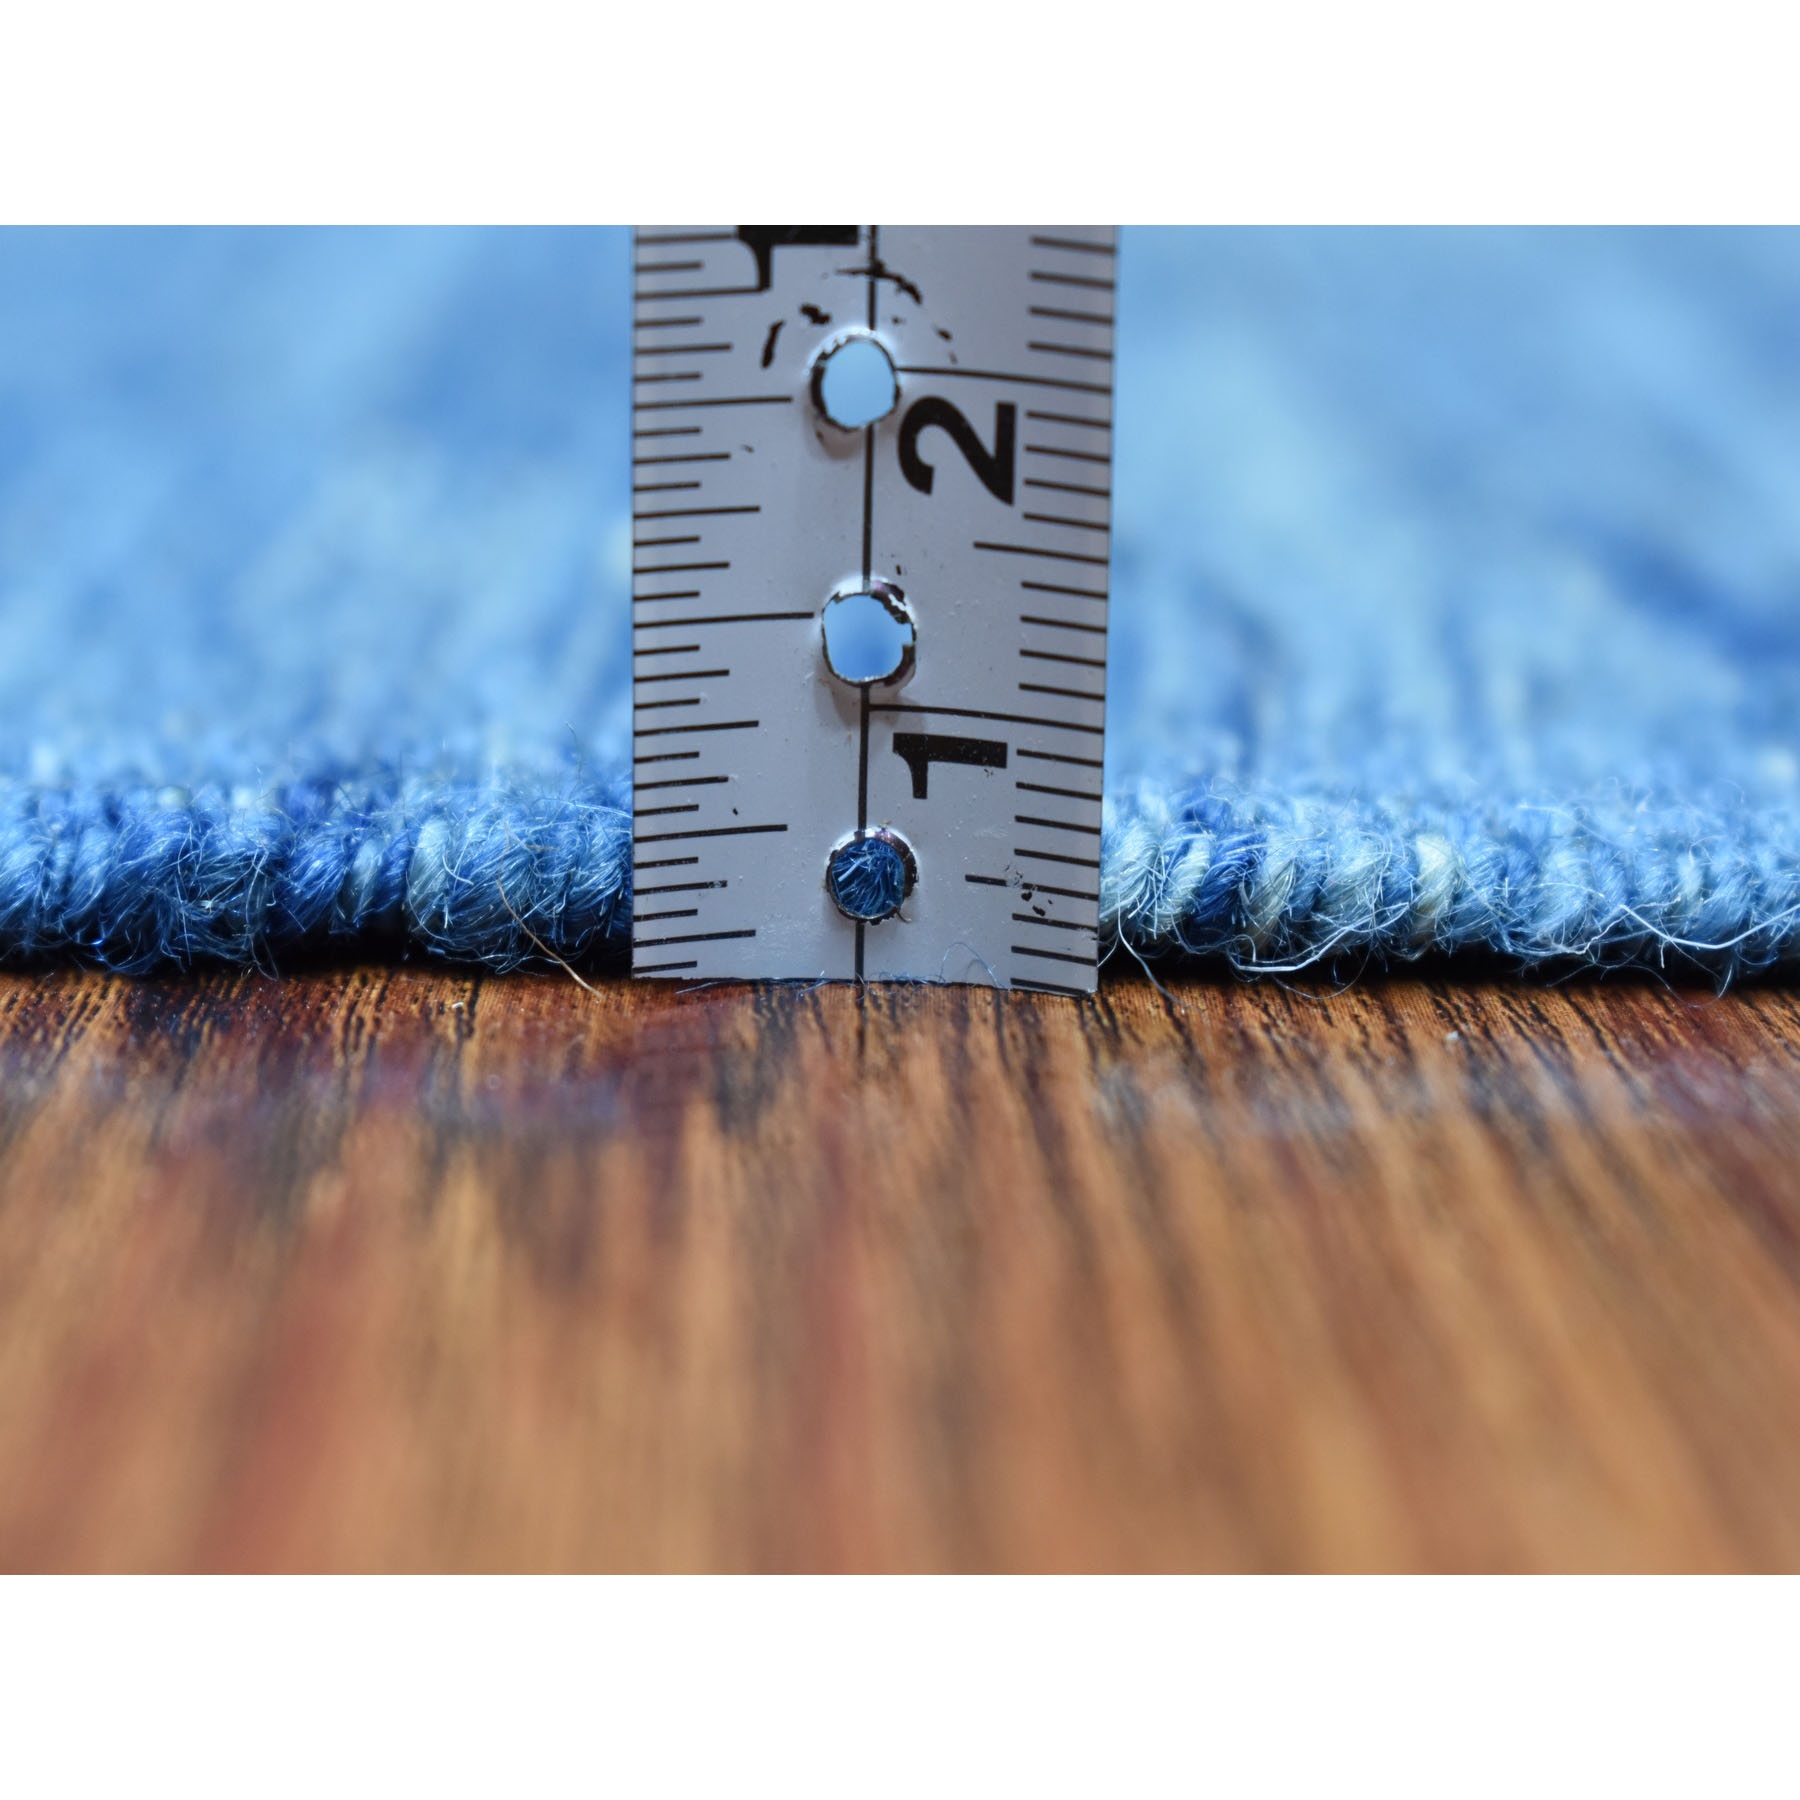 2-10 x10- Blue Shades Flat Weave Kilim Pure Wool Hand Woven Runner Oriental Rug 